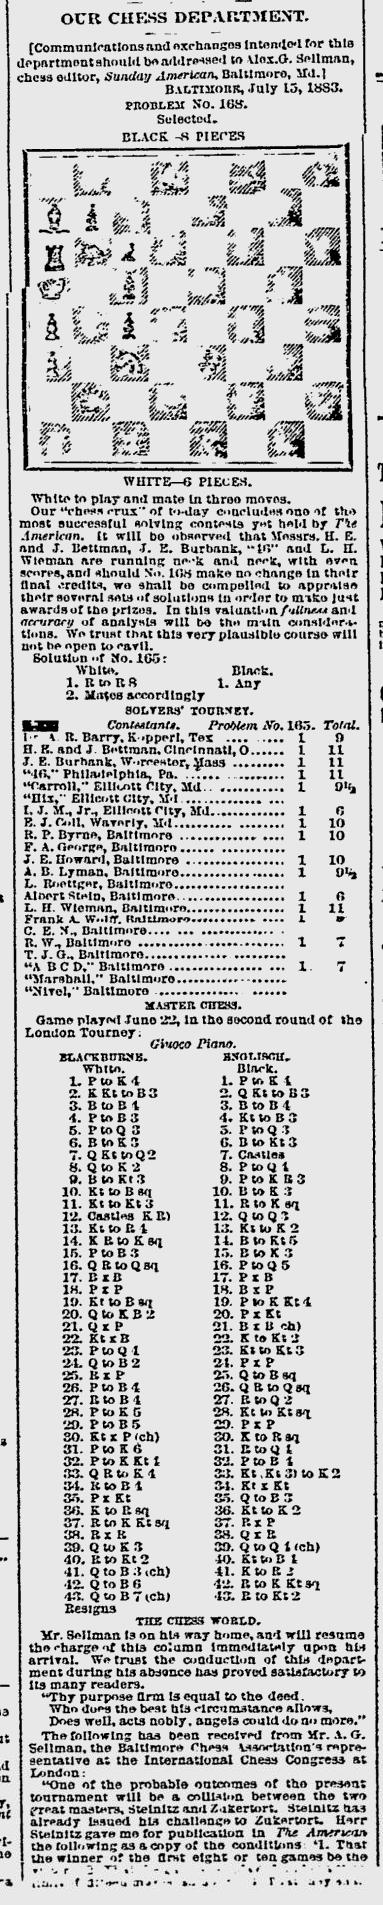 1883.07.15-01 Baltimore American.jpg